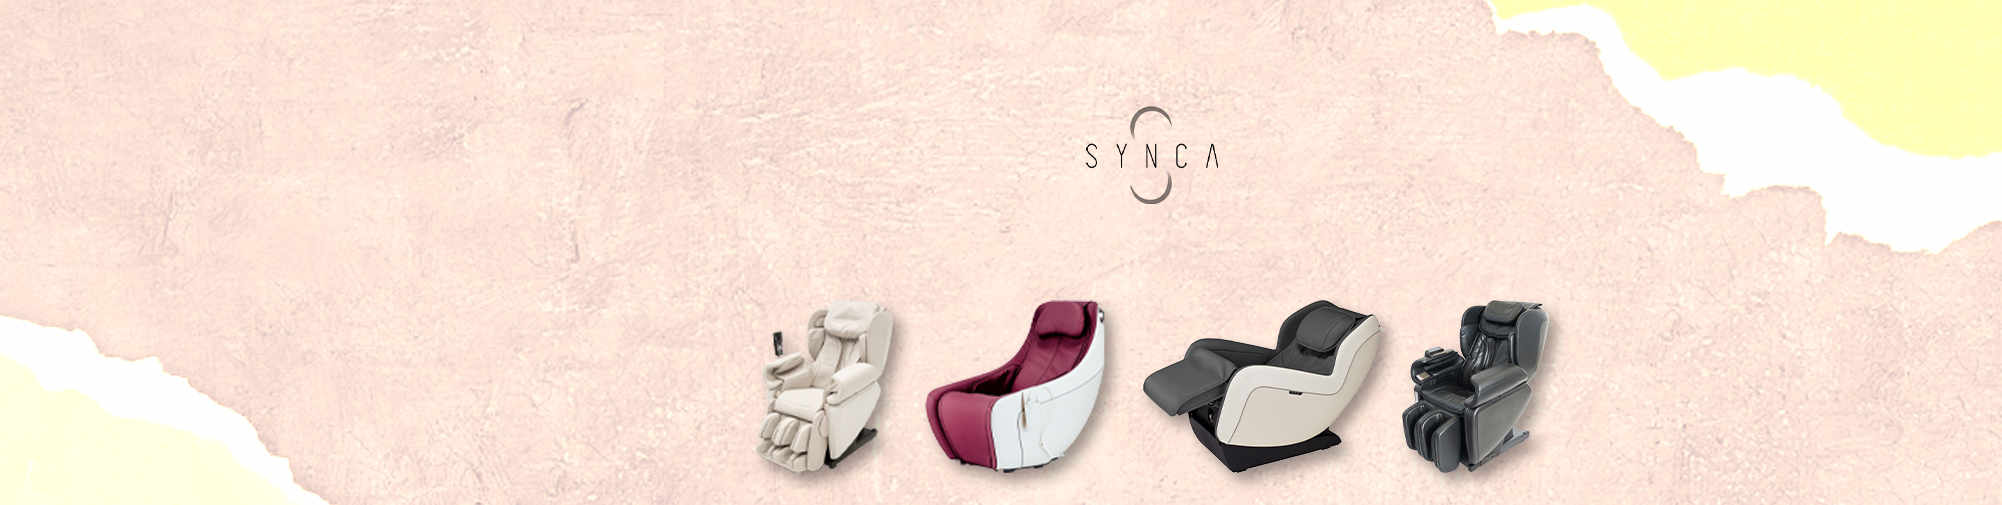 SYNCA Massage Chair Manufacturer | Massage Chair World